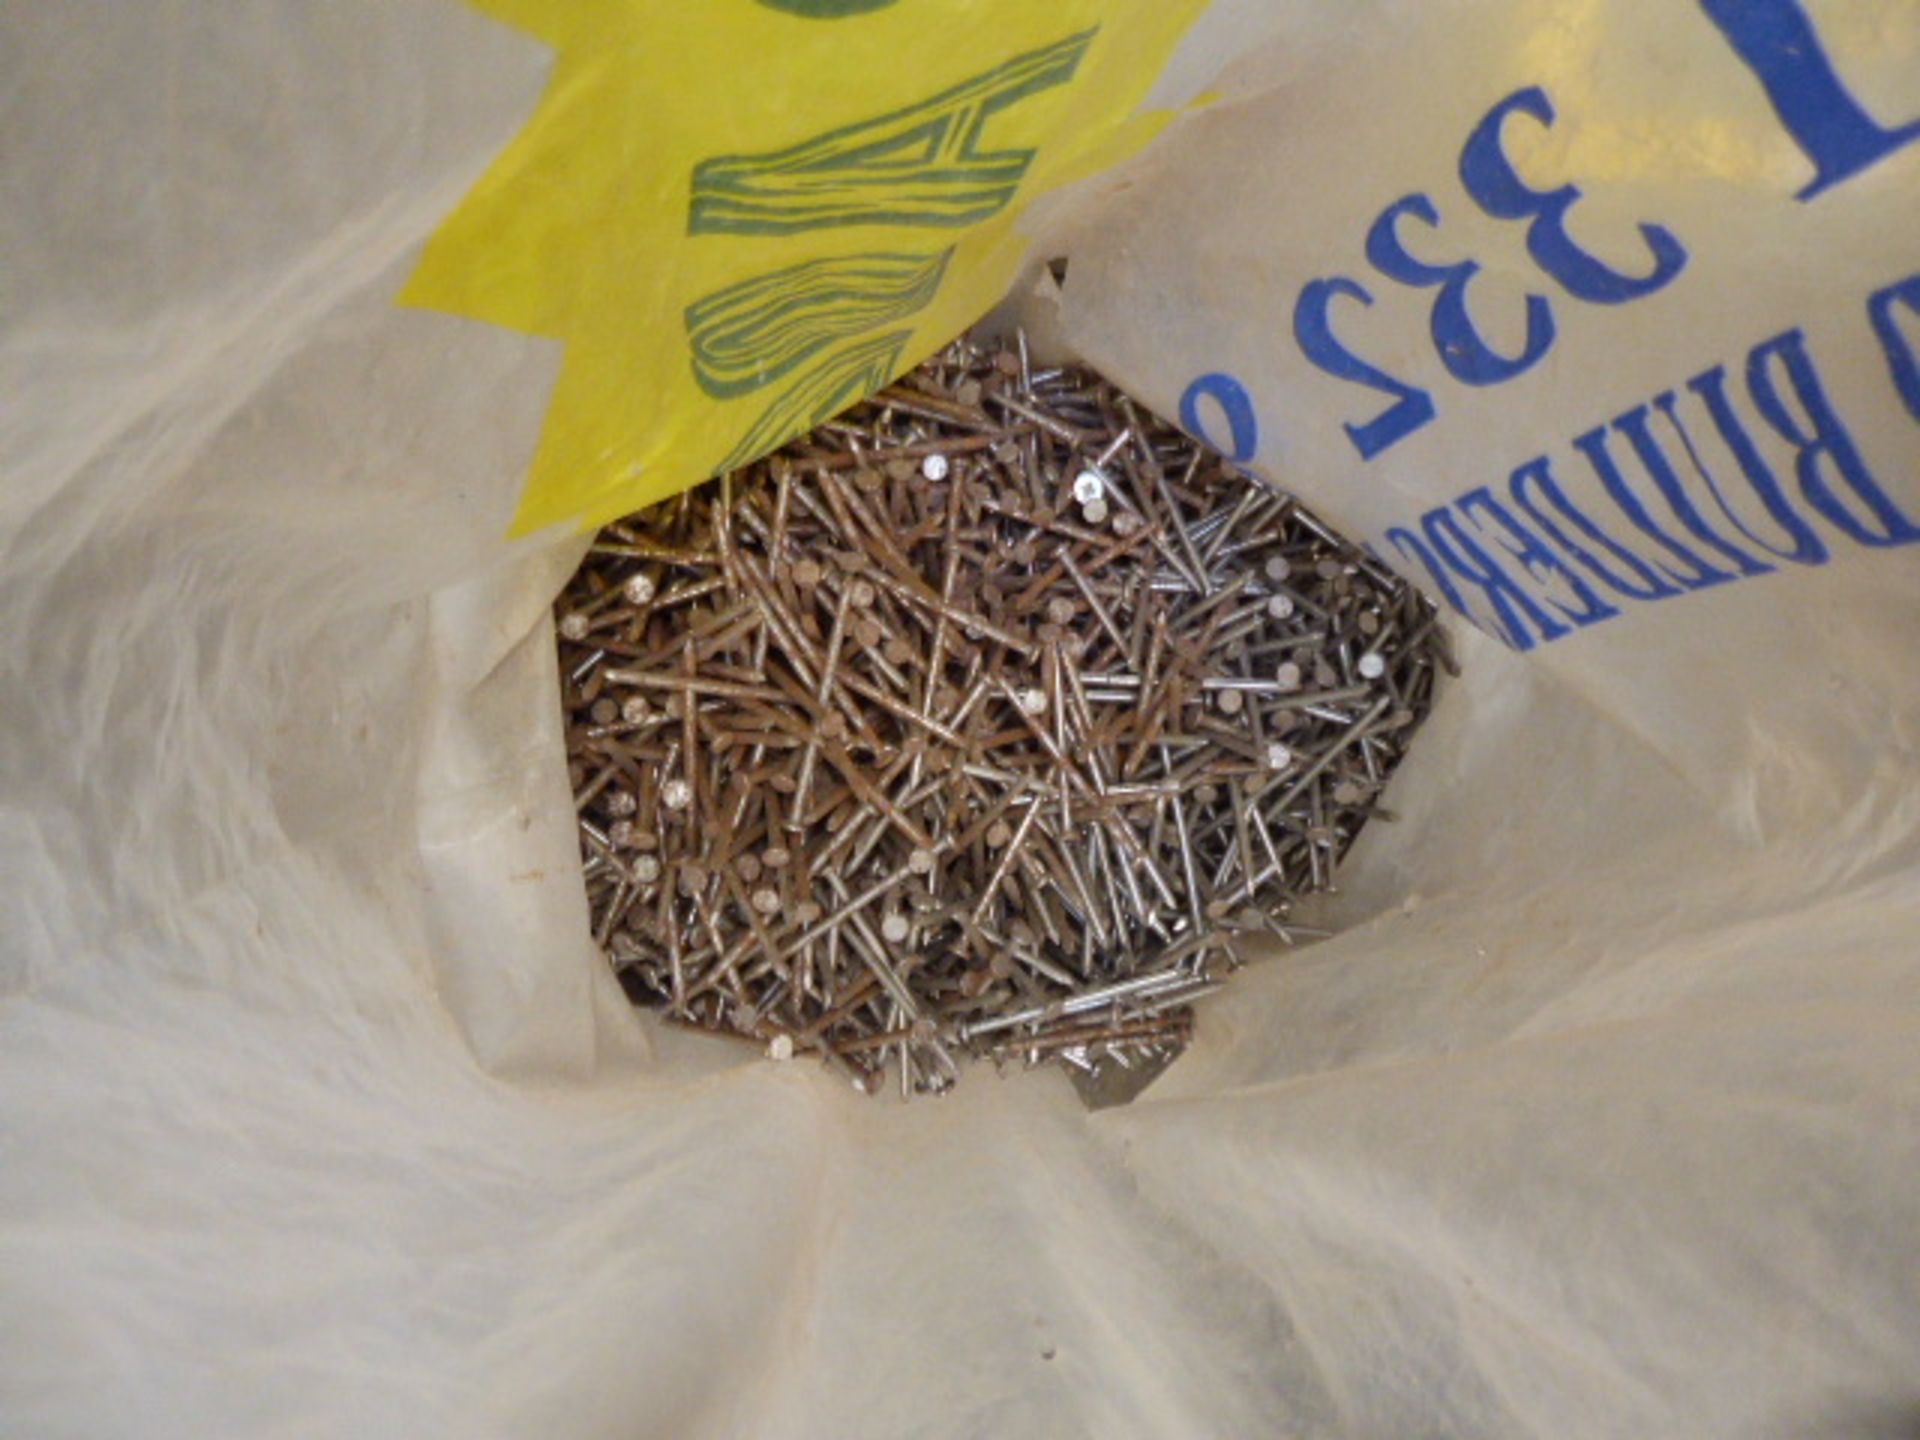 Bag of 75mm nails